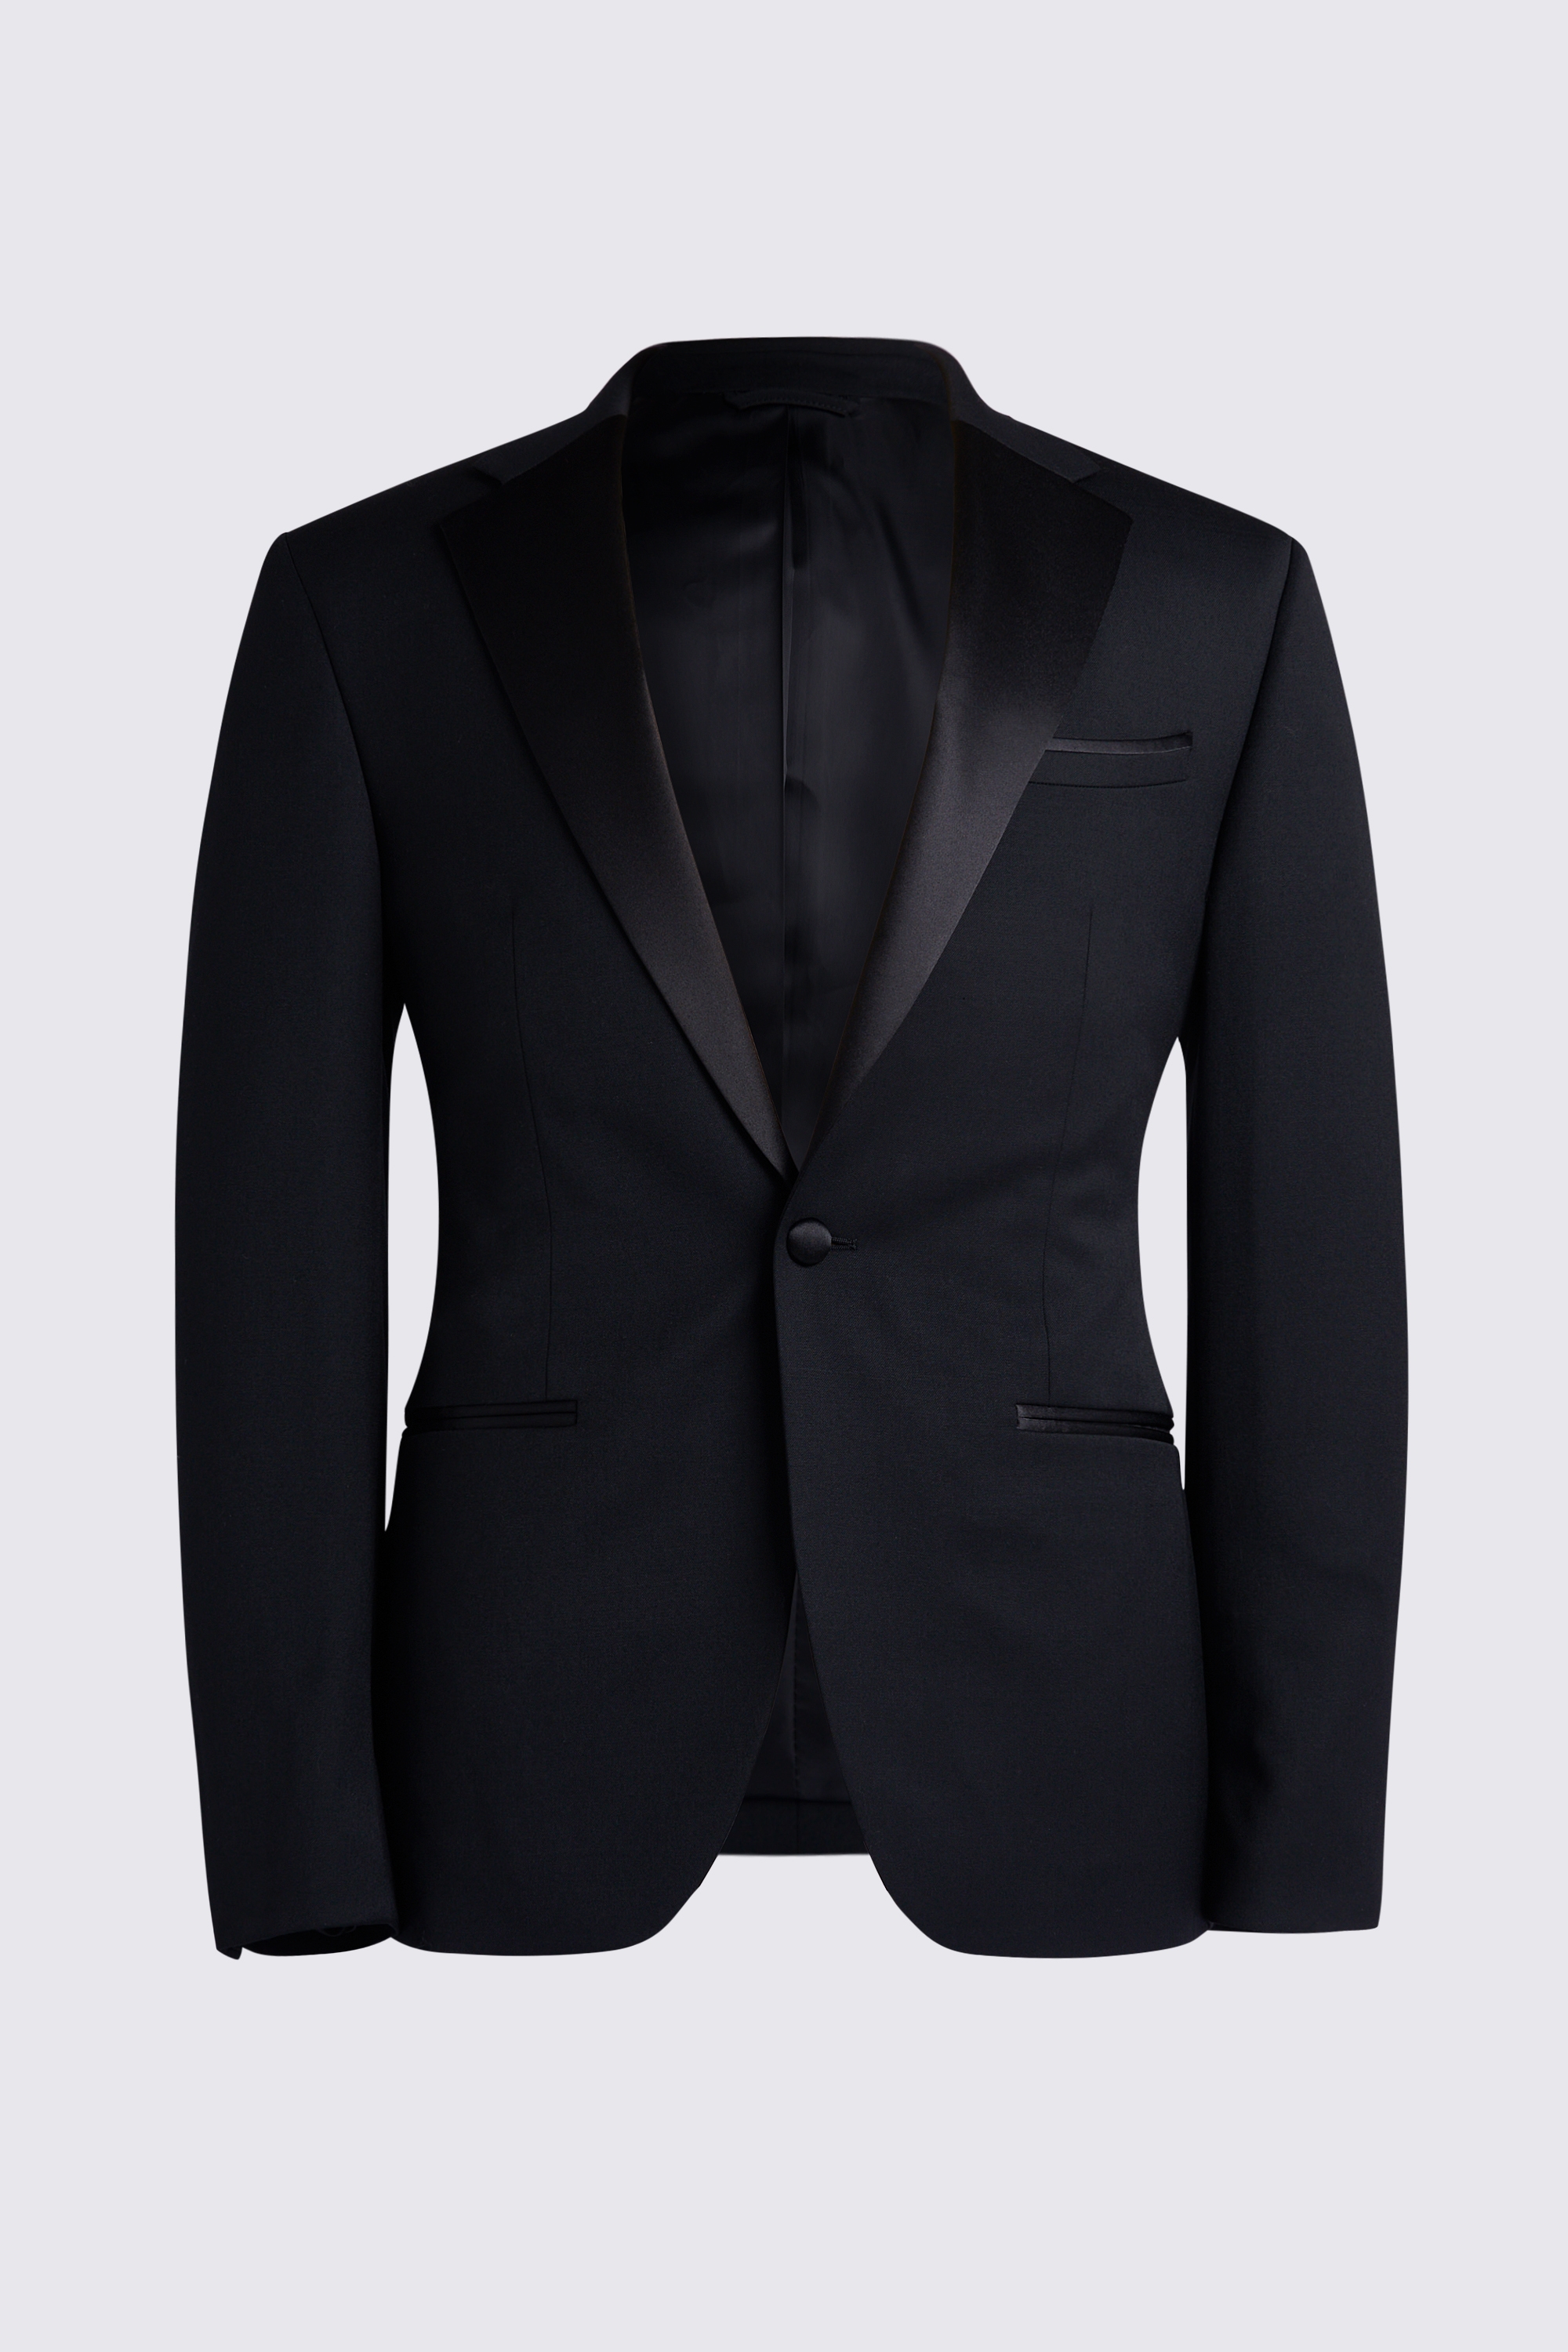 DKNY Slim Fit Black Notch Lapel Tuxedo Jacket | Buy Online at Moss